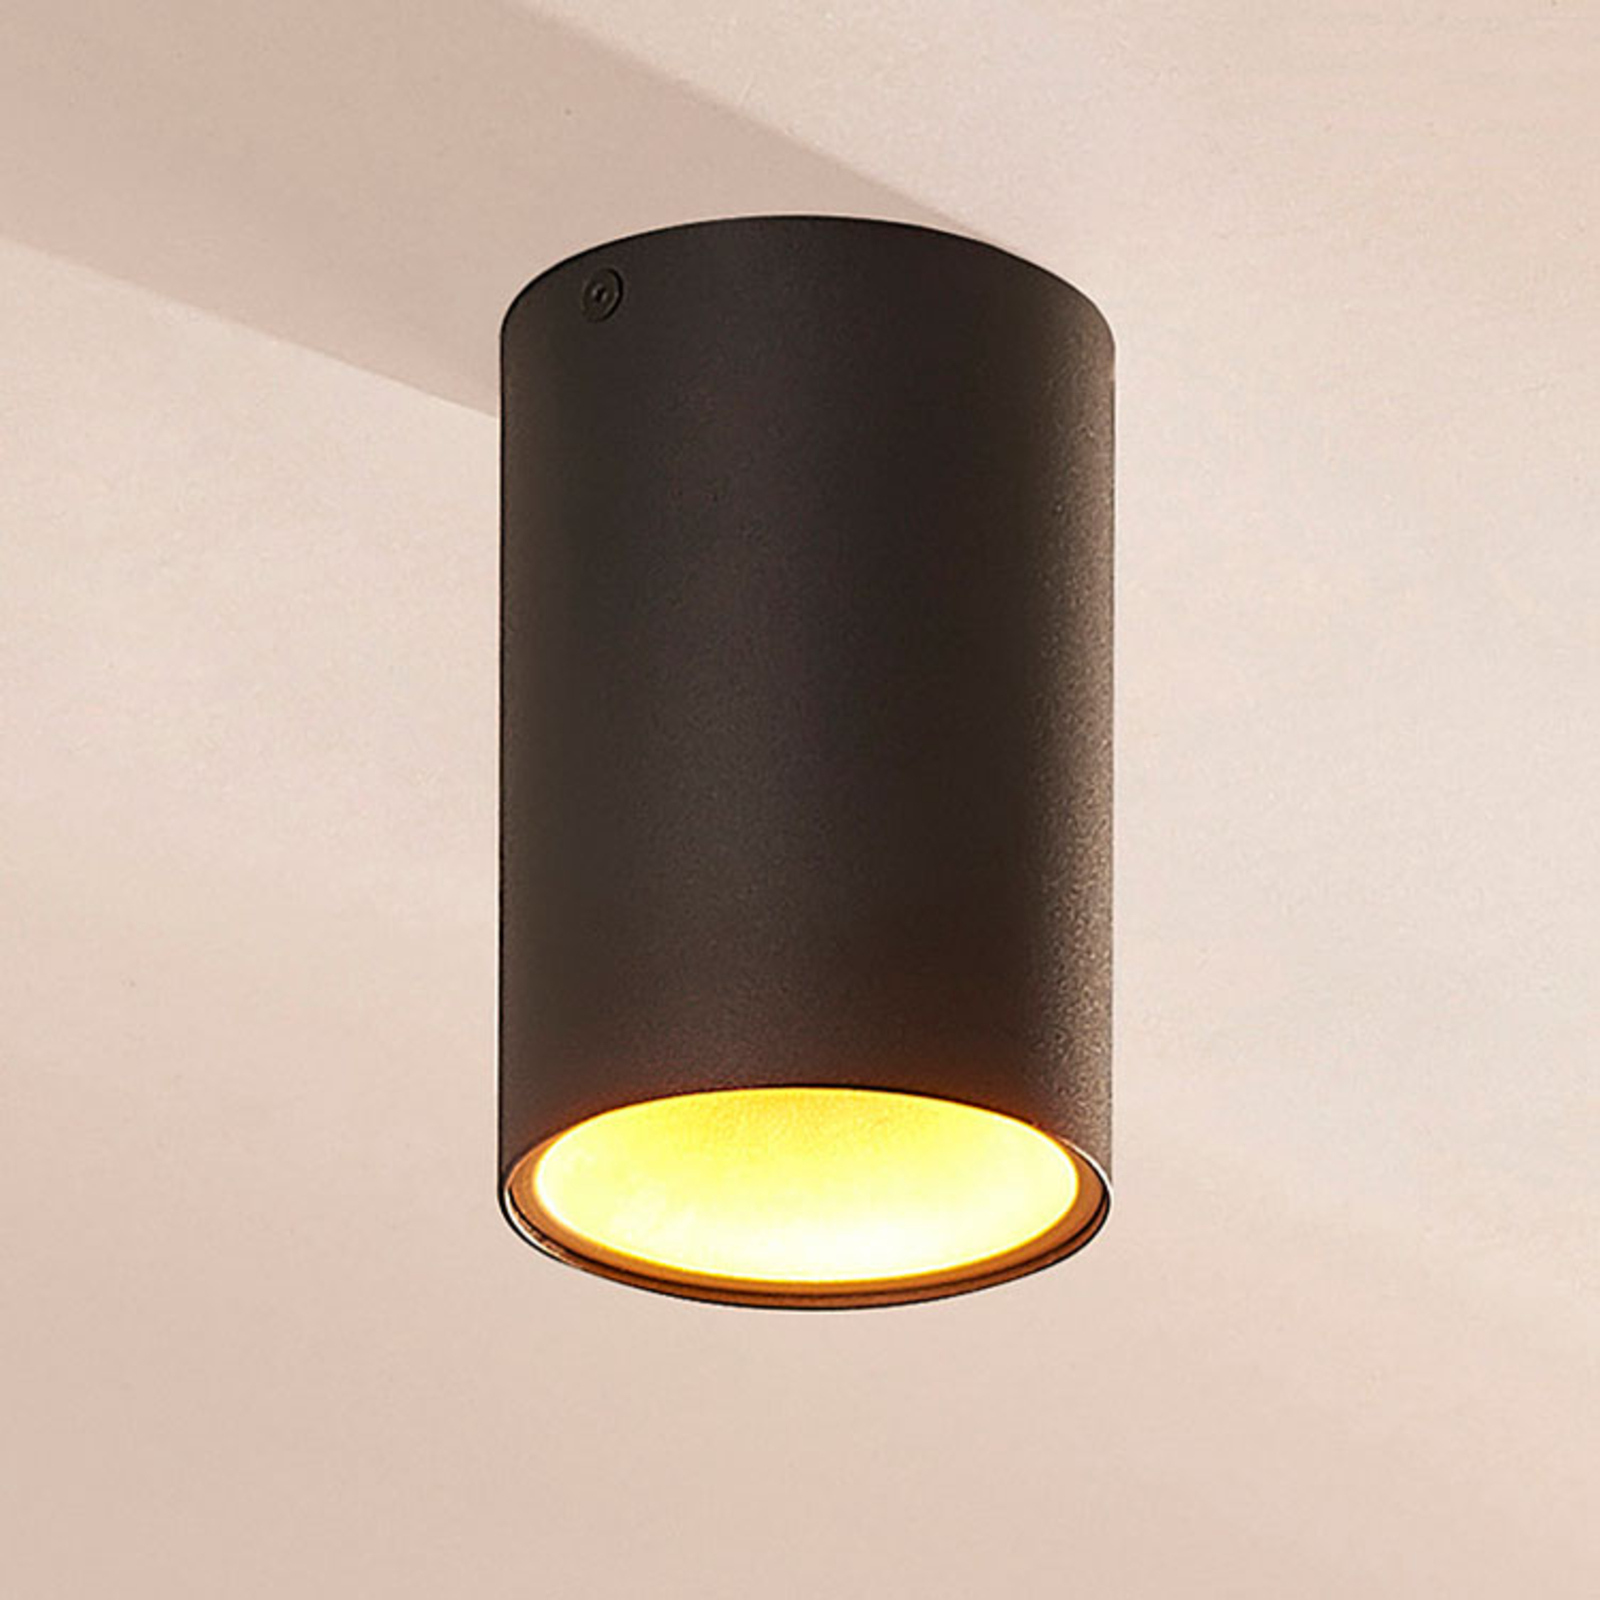 VINJA - Ceiling light with interior reflector